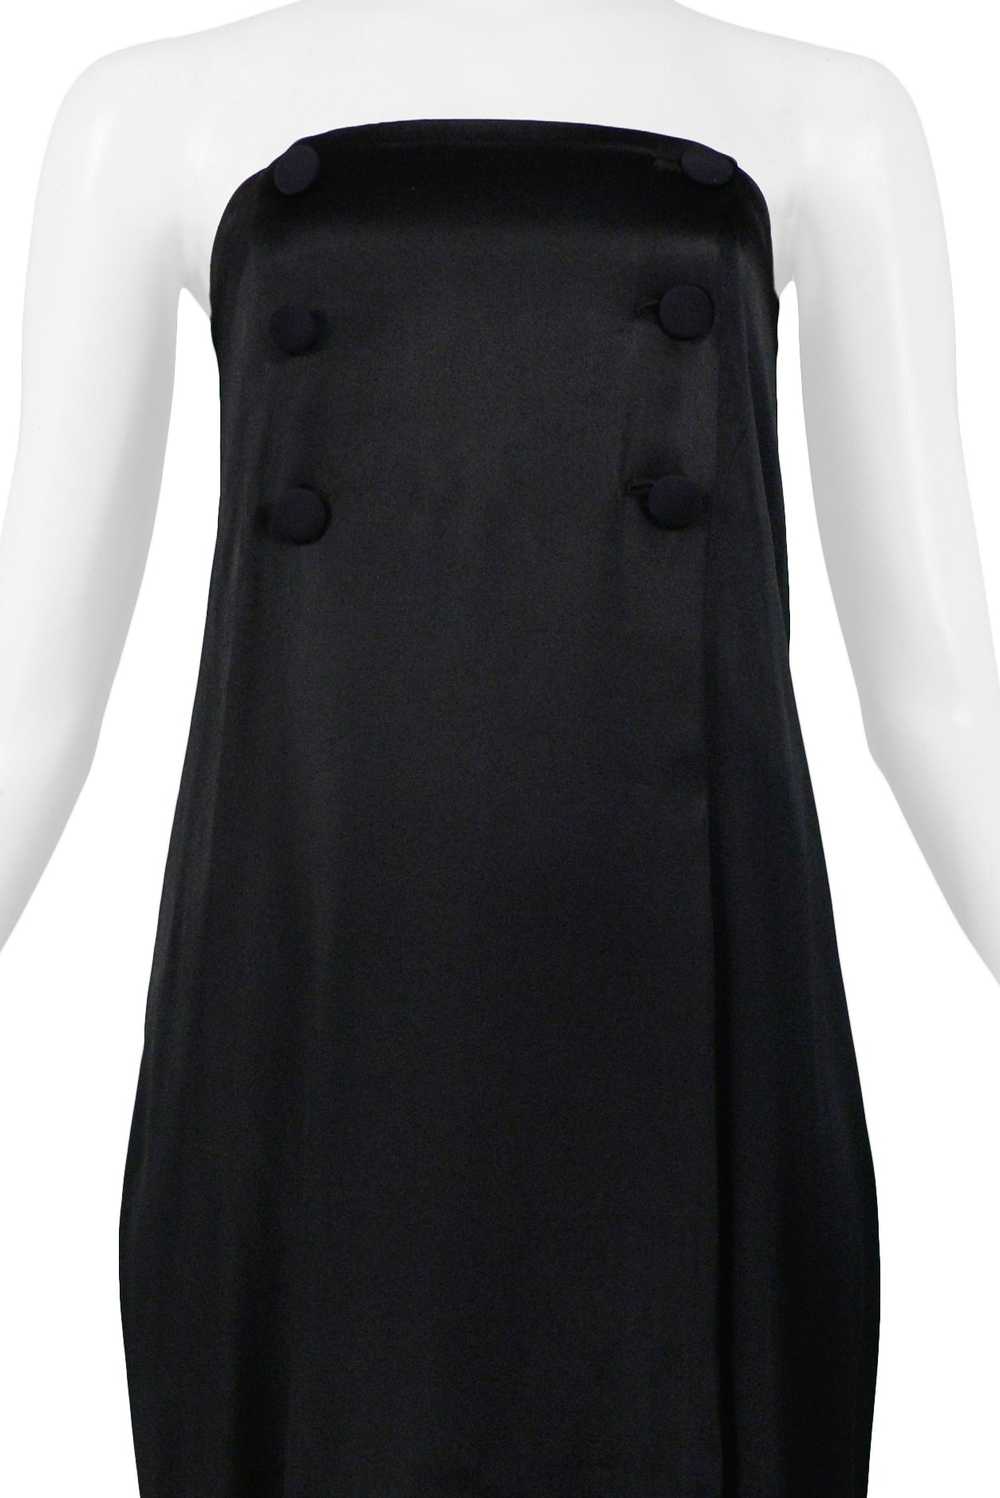 SOPRANO BLACK SATIN DOUBLE BREASTED DRESS - image 3